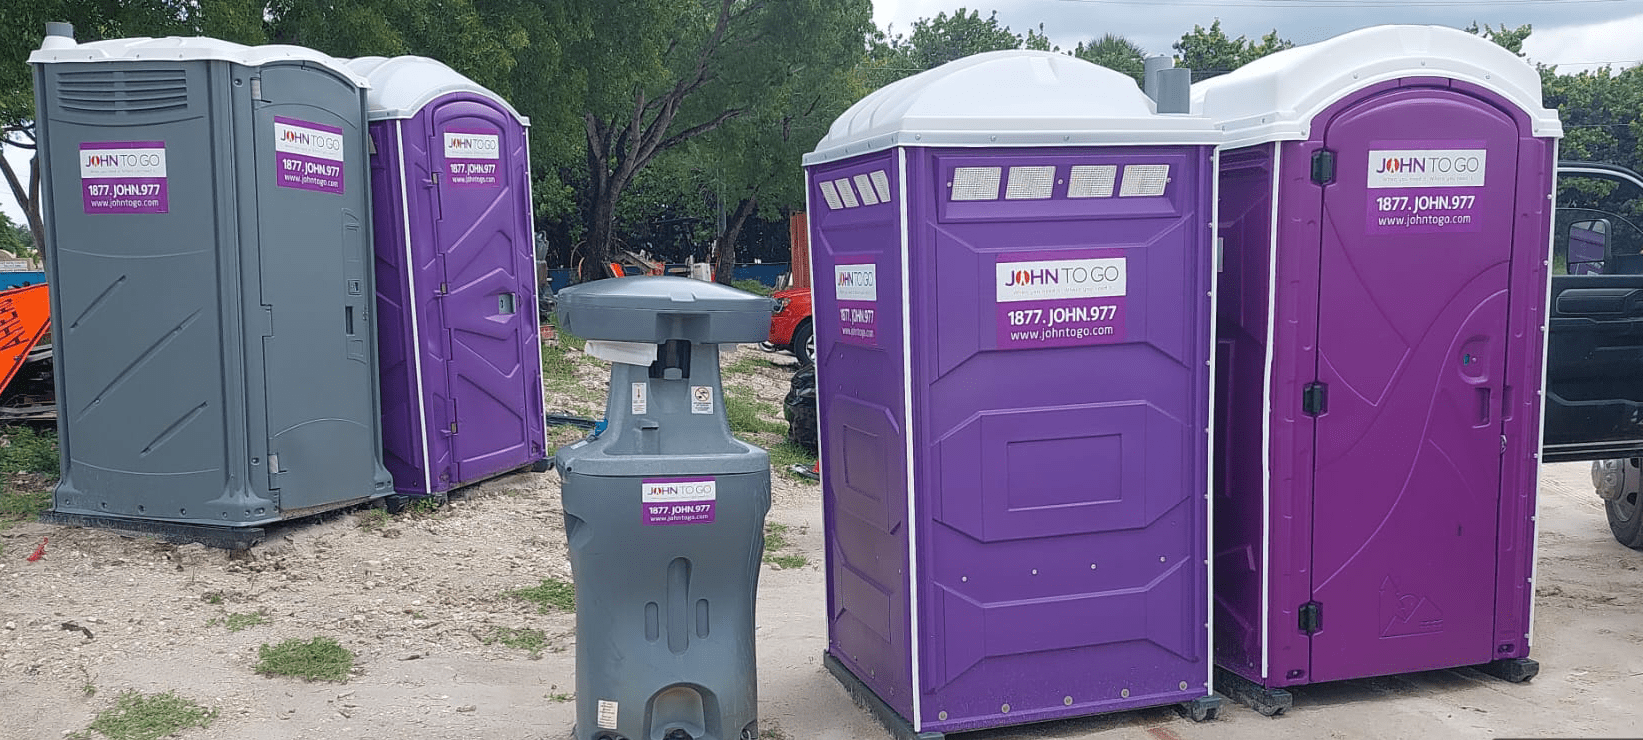 John To Go’s porta potties and handwashing station on construction site